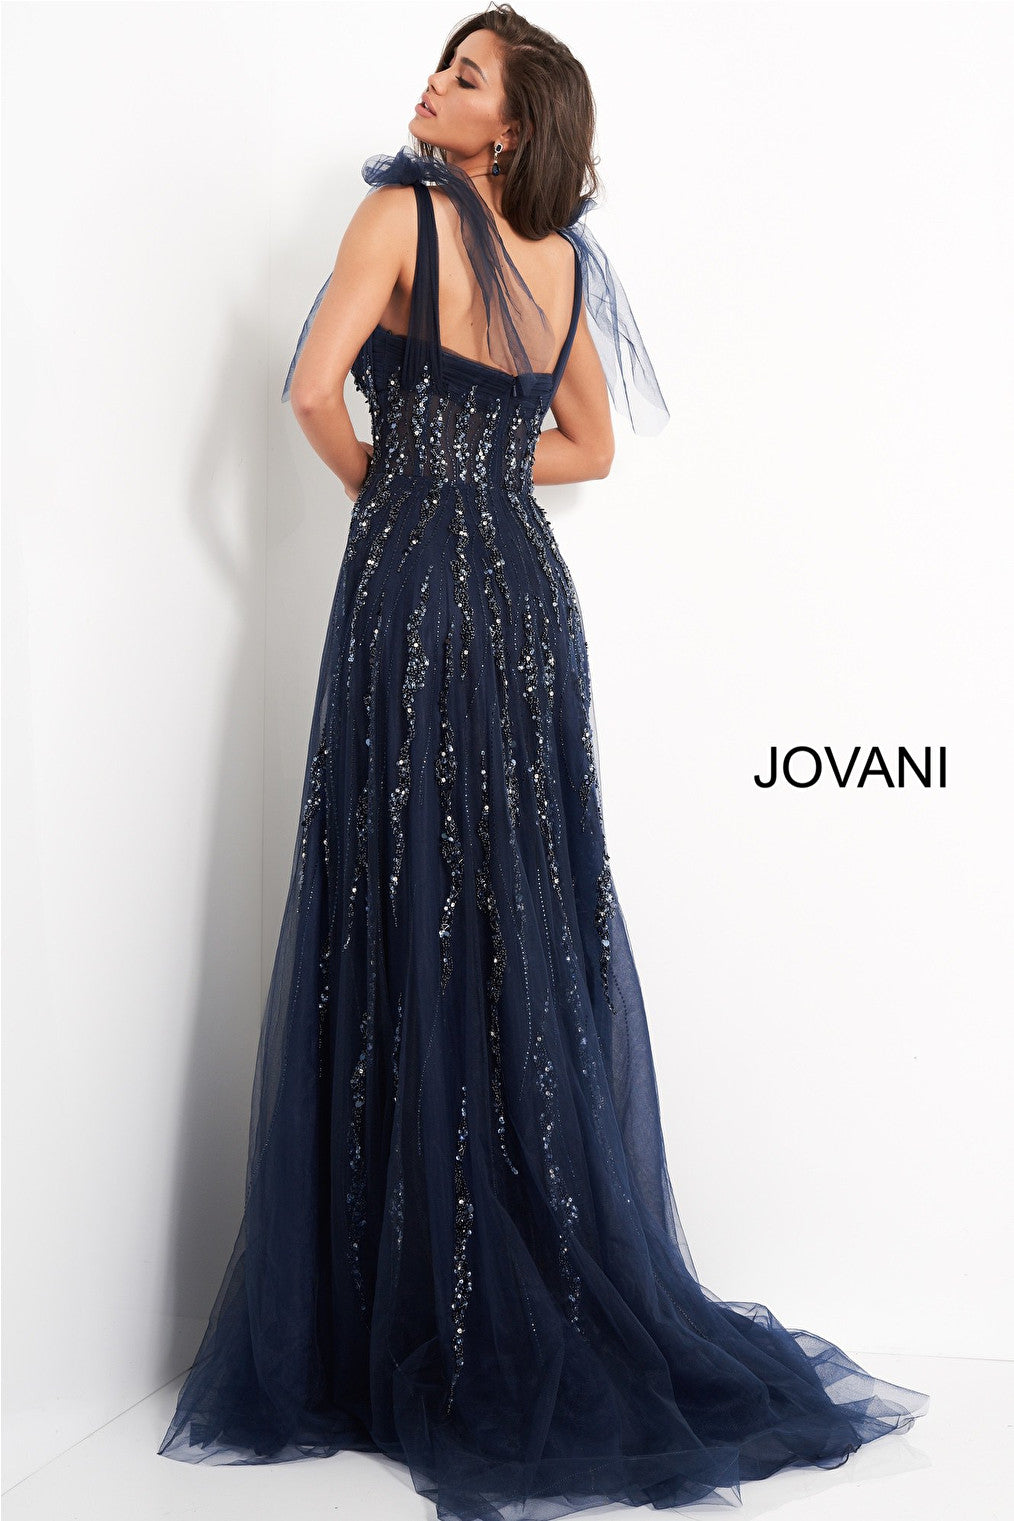 Sweetheart neck navy Jovani evening dress 04634